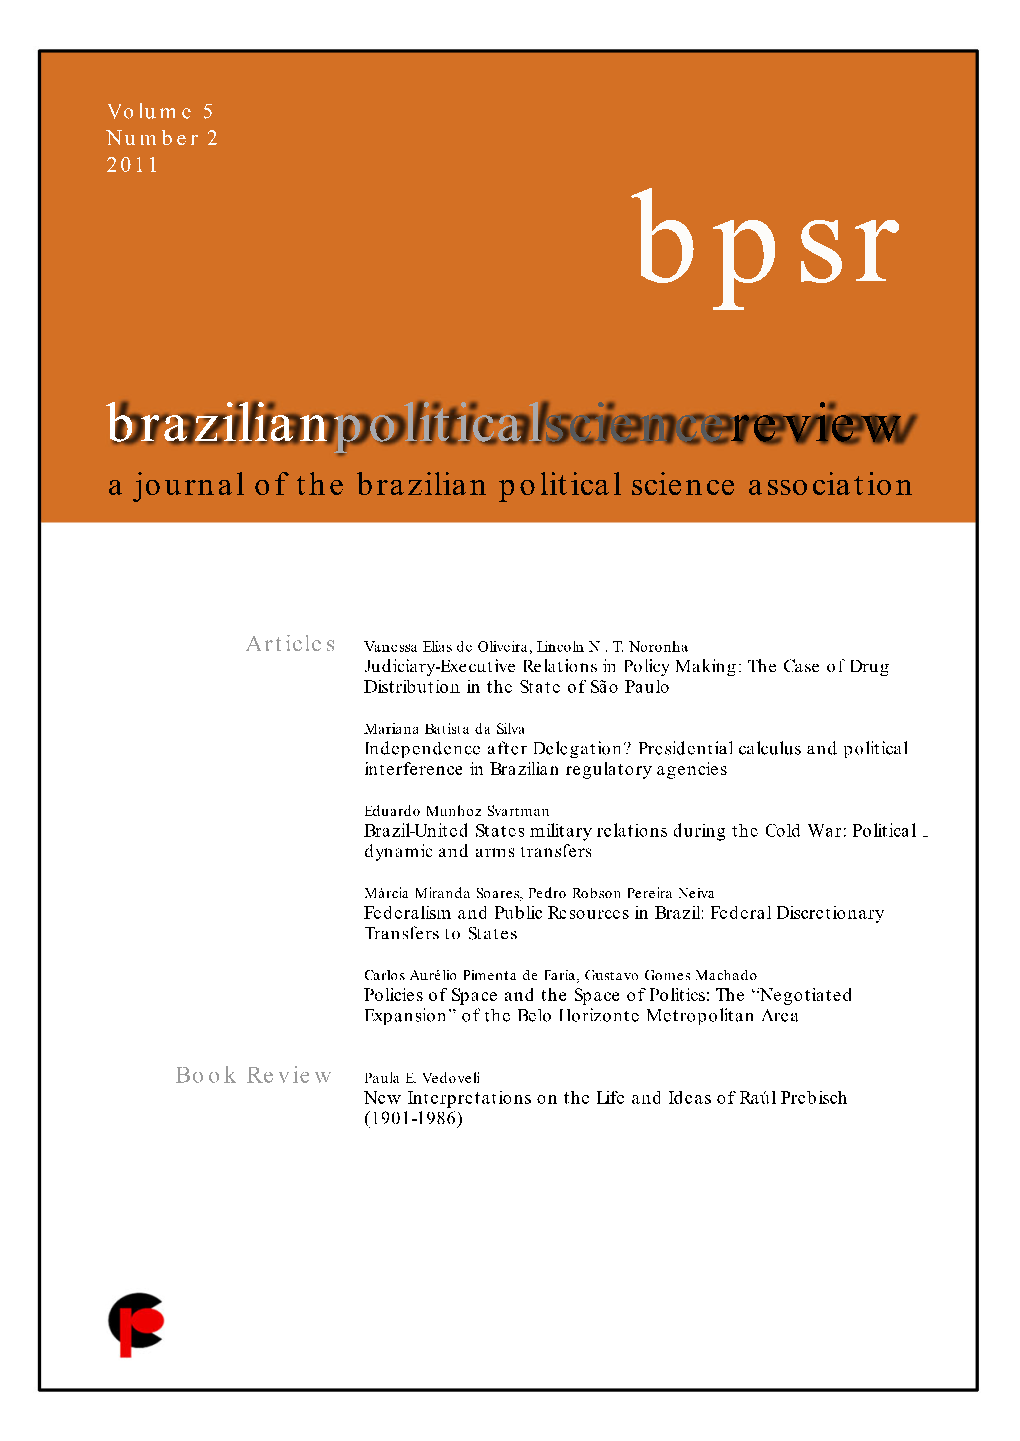 Brazilian Political Science Review Vol 5, No 2